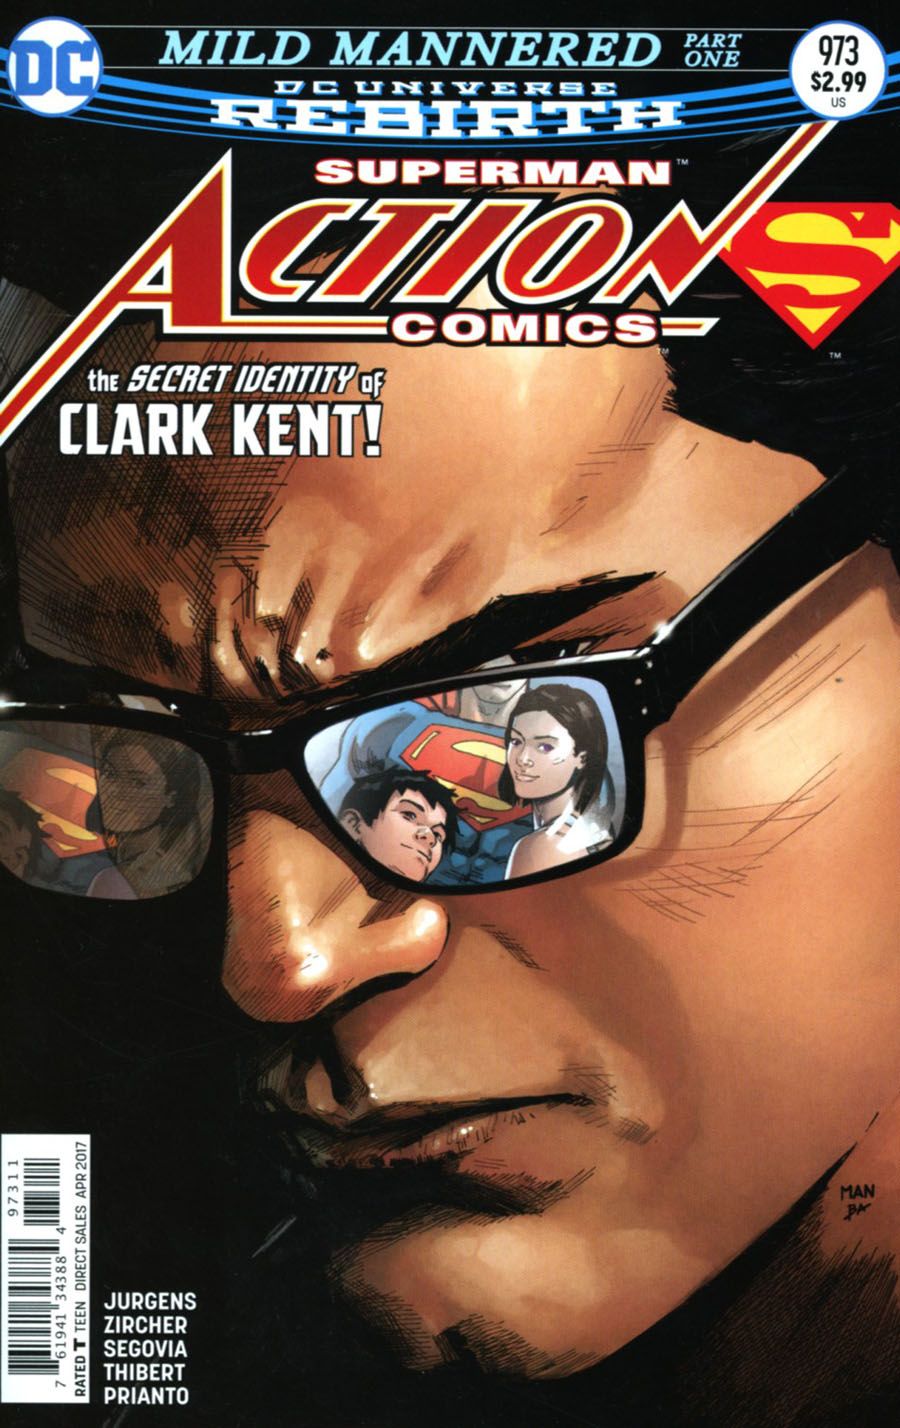 Action Comics #973 Comic